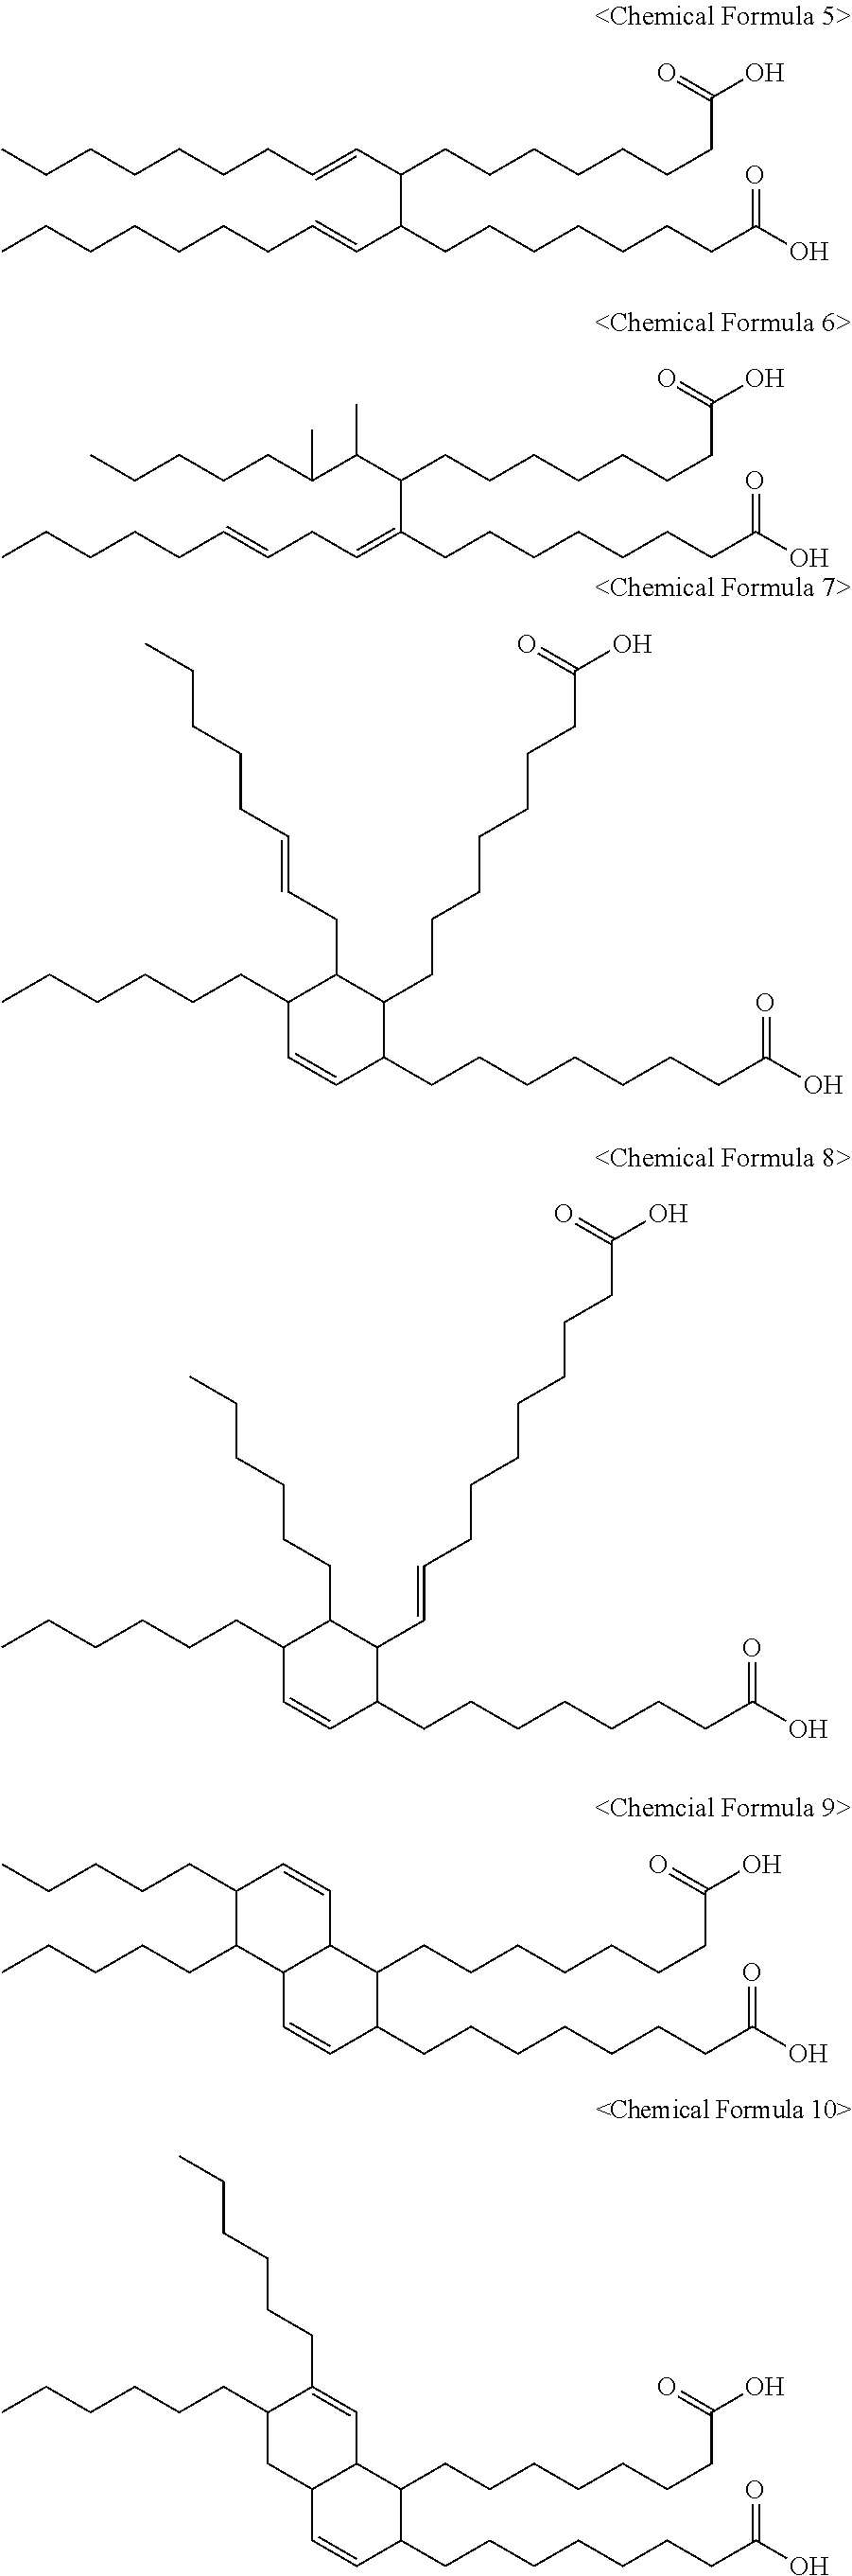 Method for preparing conjugated diene-based polymer and method for preparing graft copolymer comprising the same